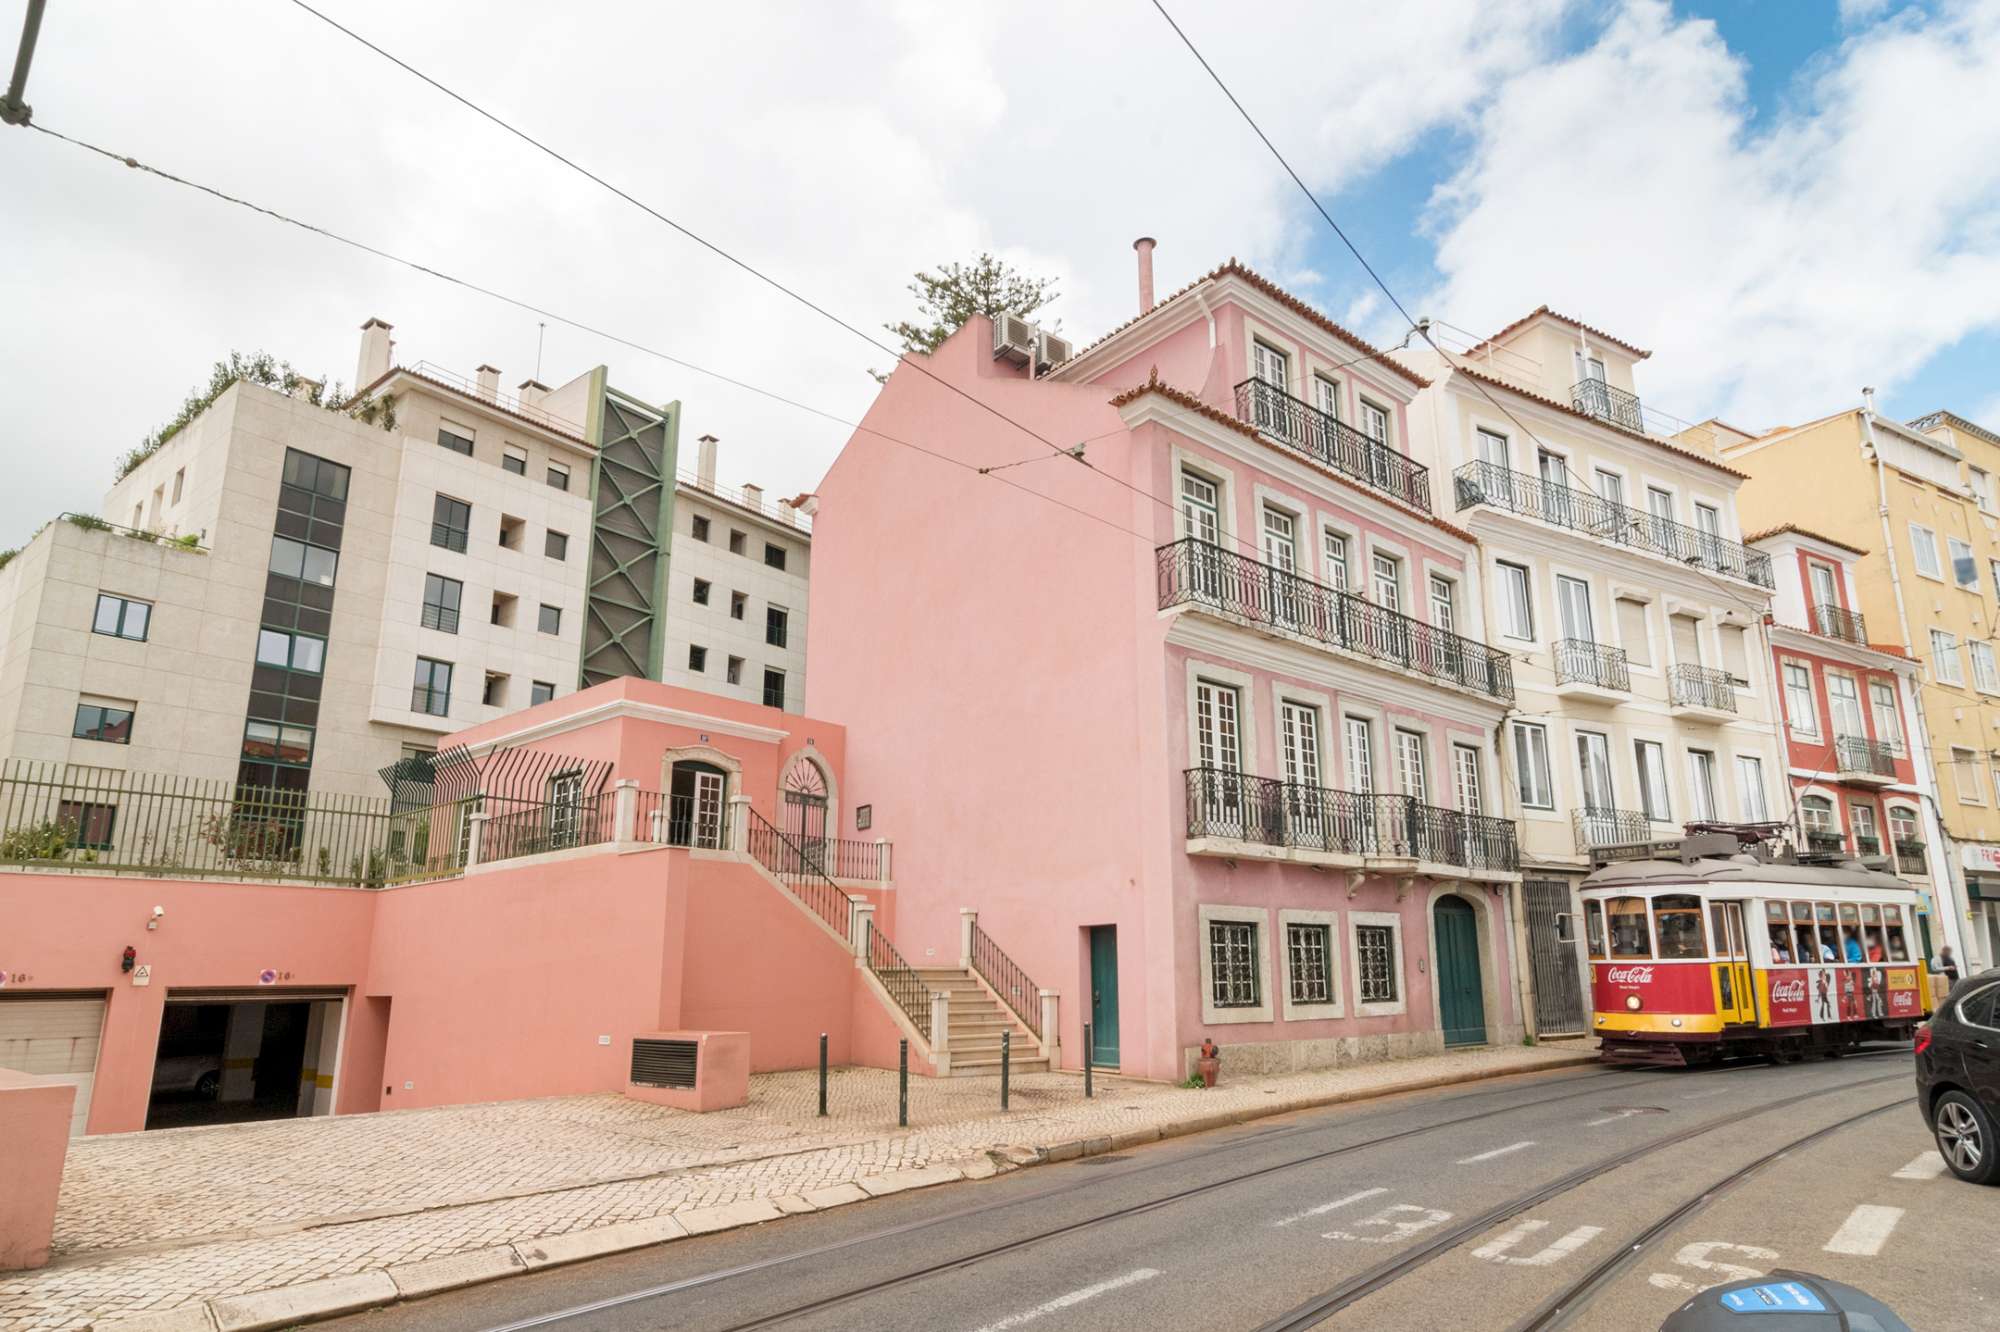 493 sq m office building for rent in Graça, Lisbon